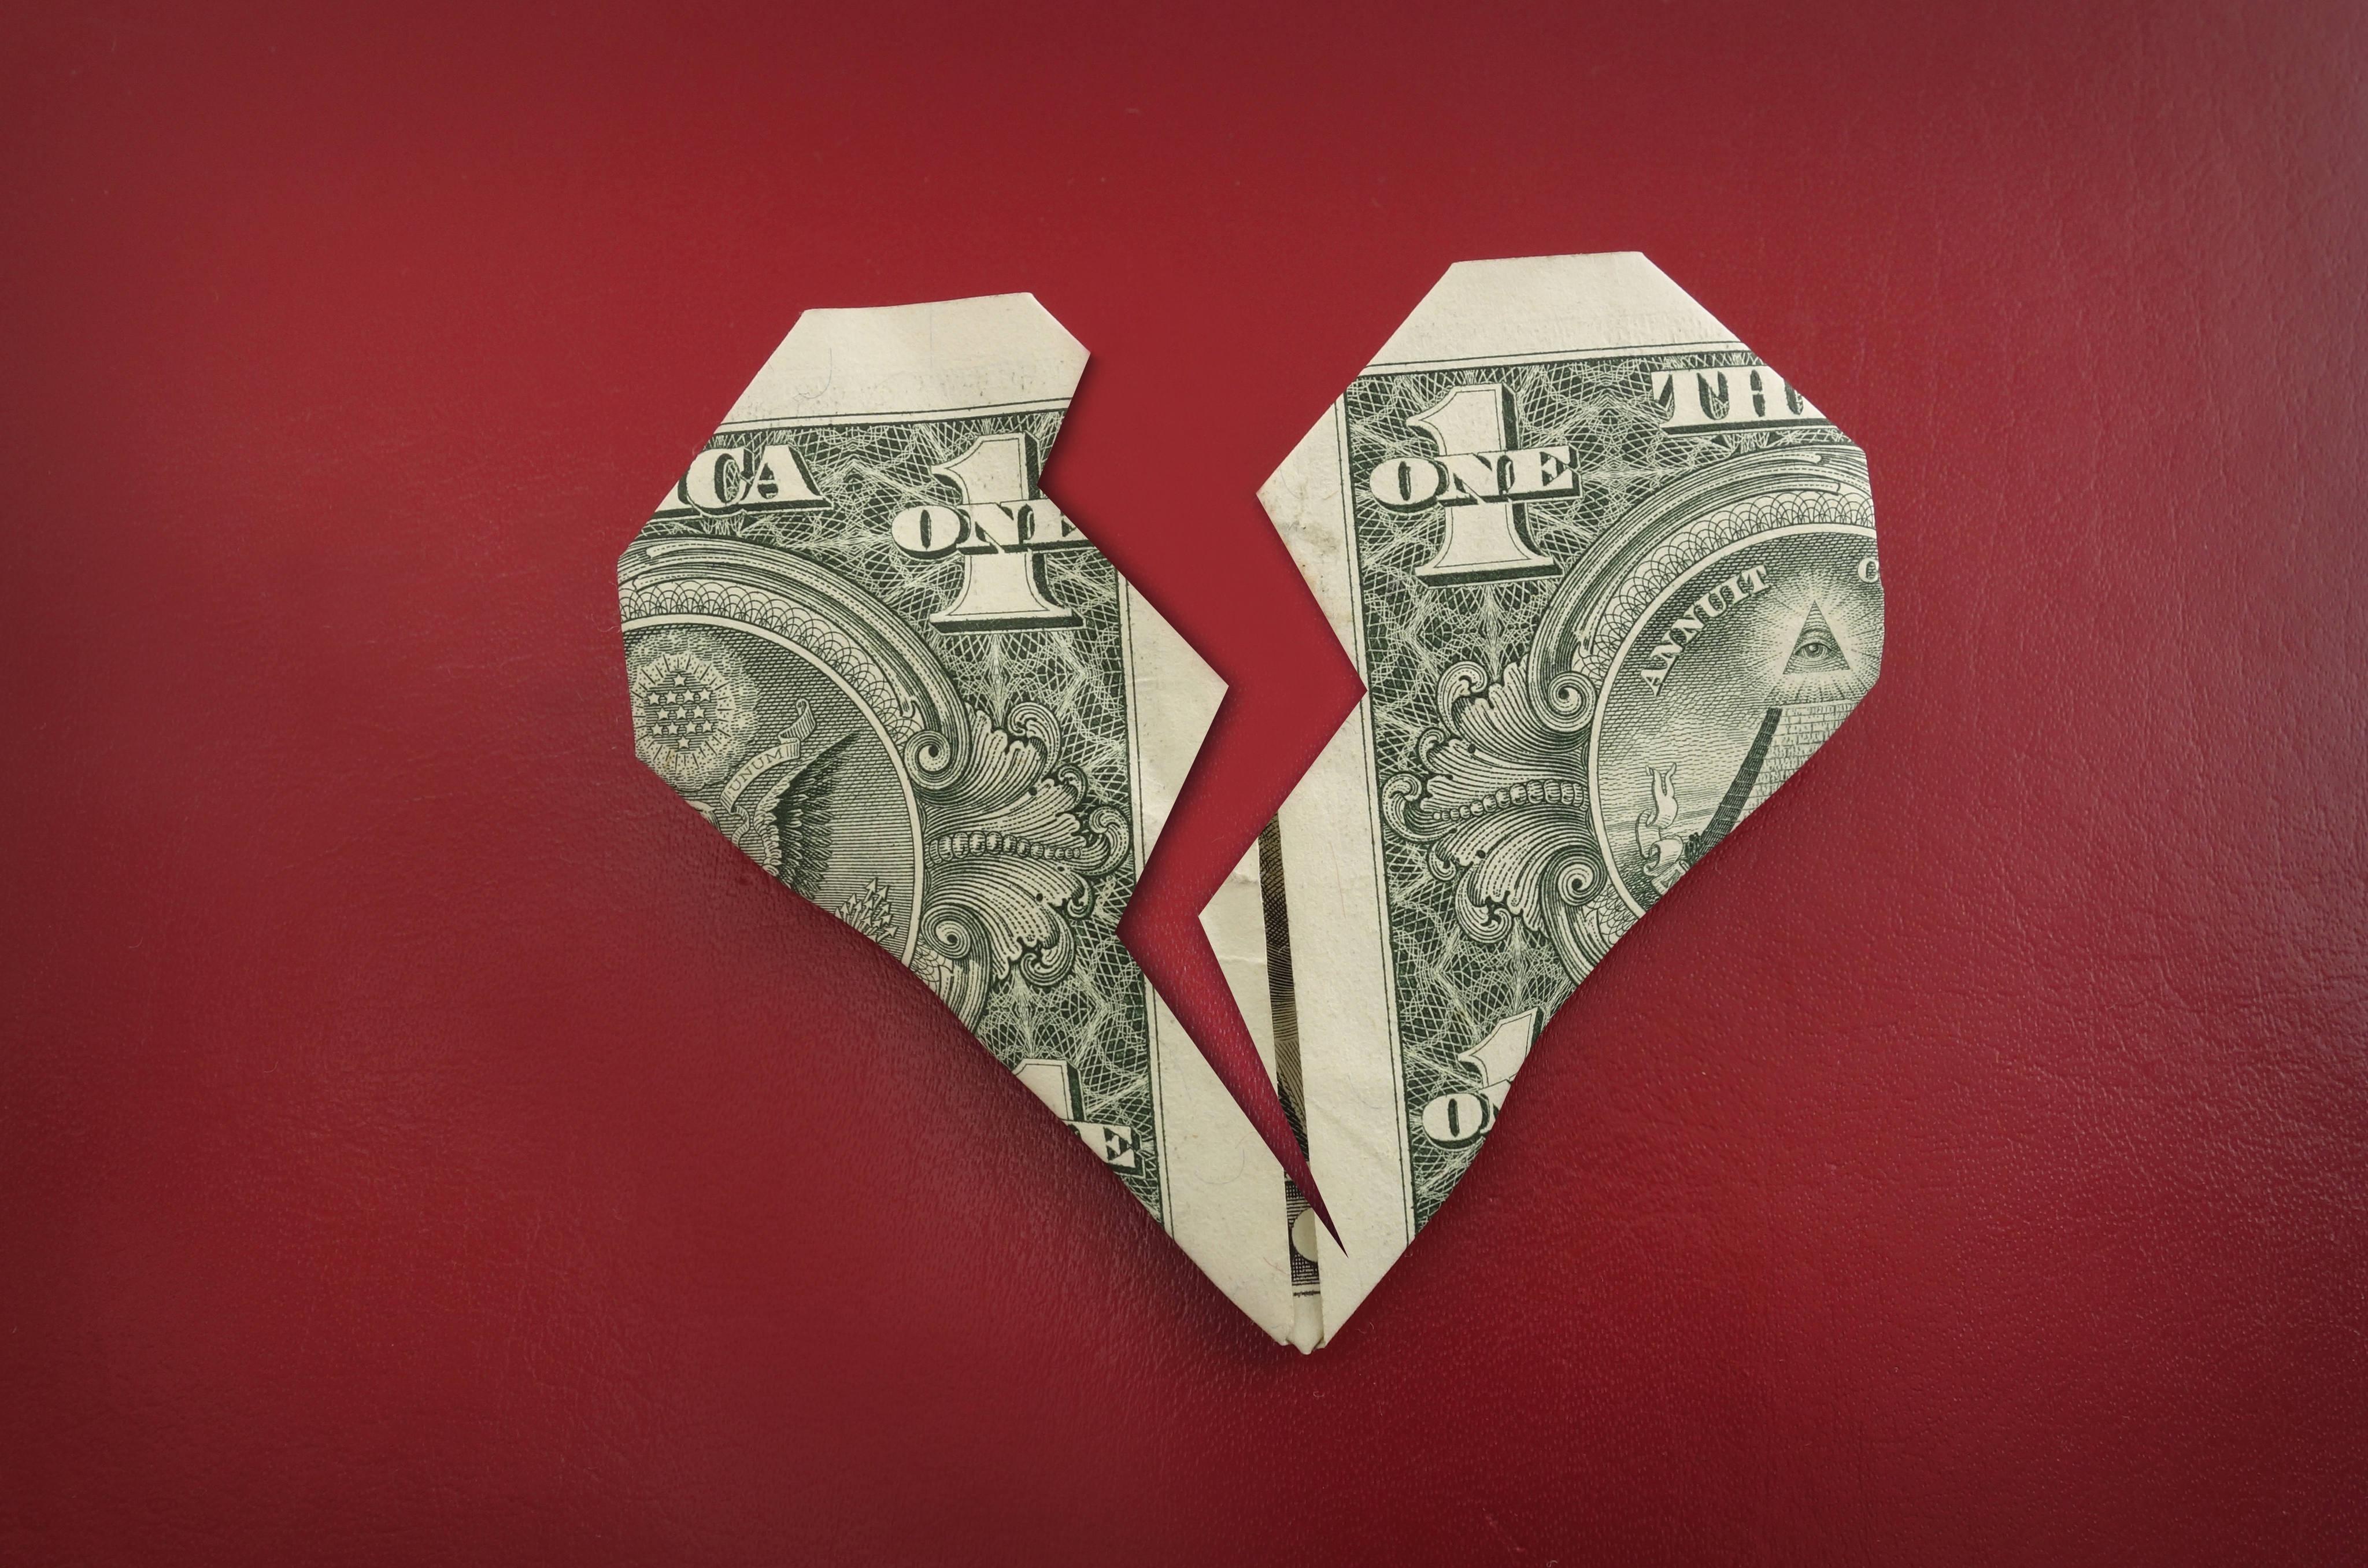 Origami Heart Out Of A Dollar Origami Heart Feldesman Tucker Leifer Fidell Llp